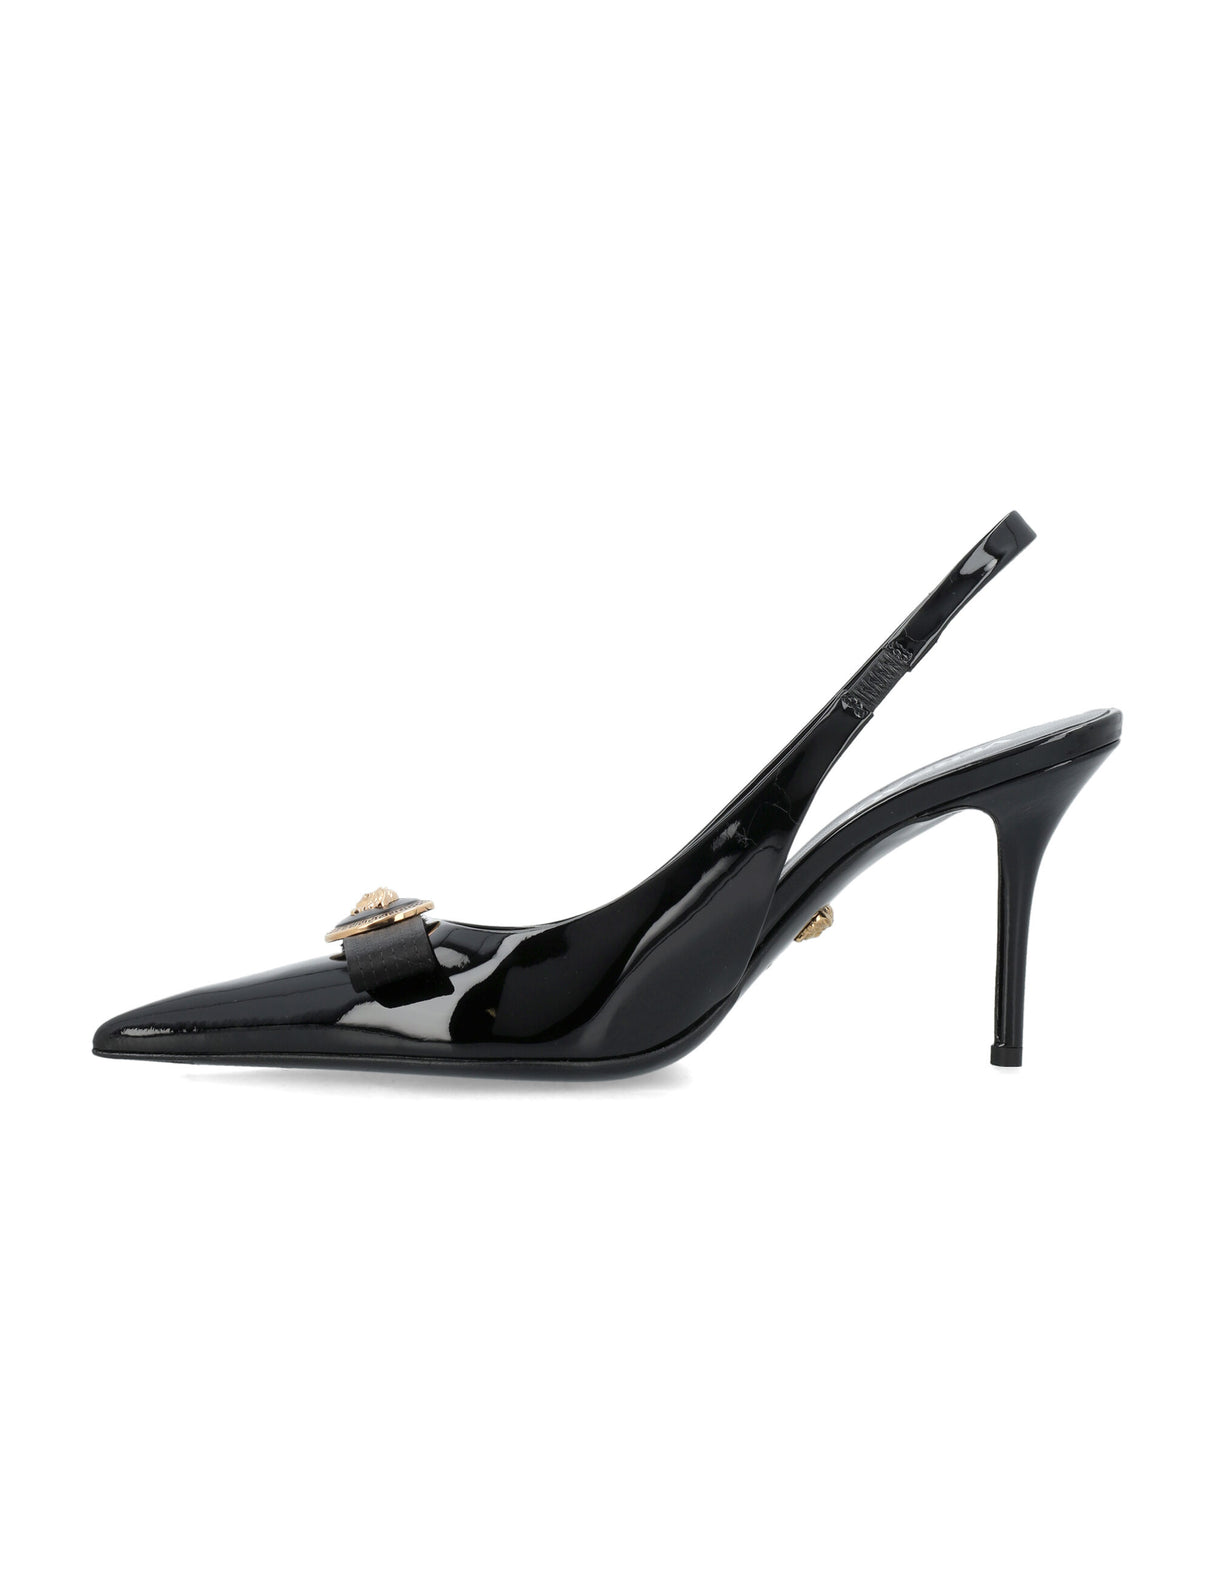 224-Versace折帶中踝泵鞋 - 黑色